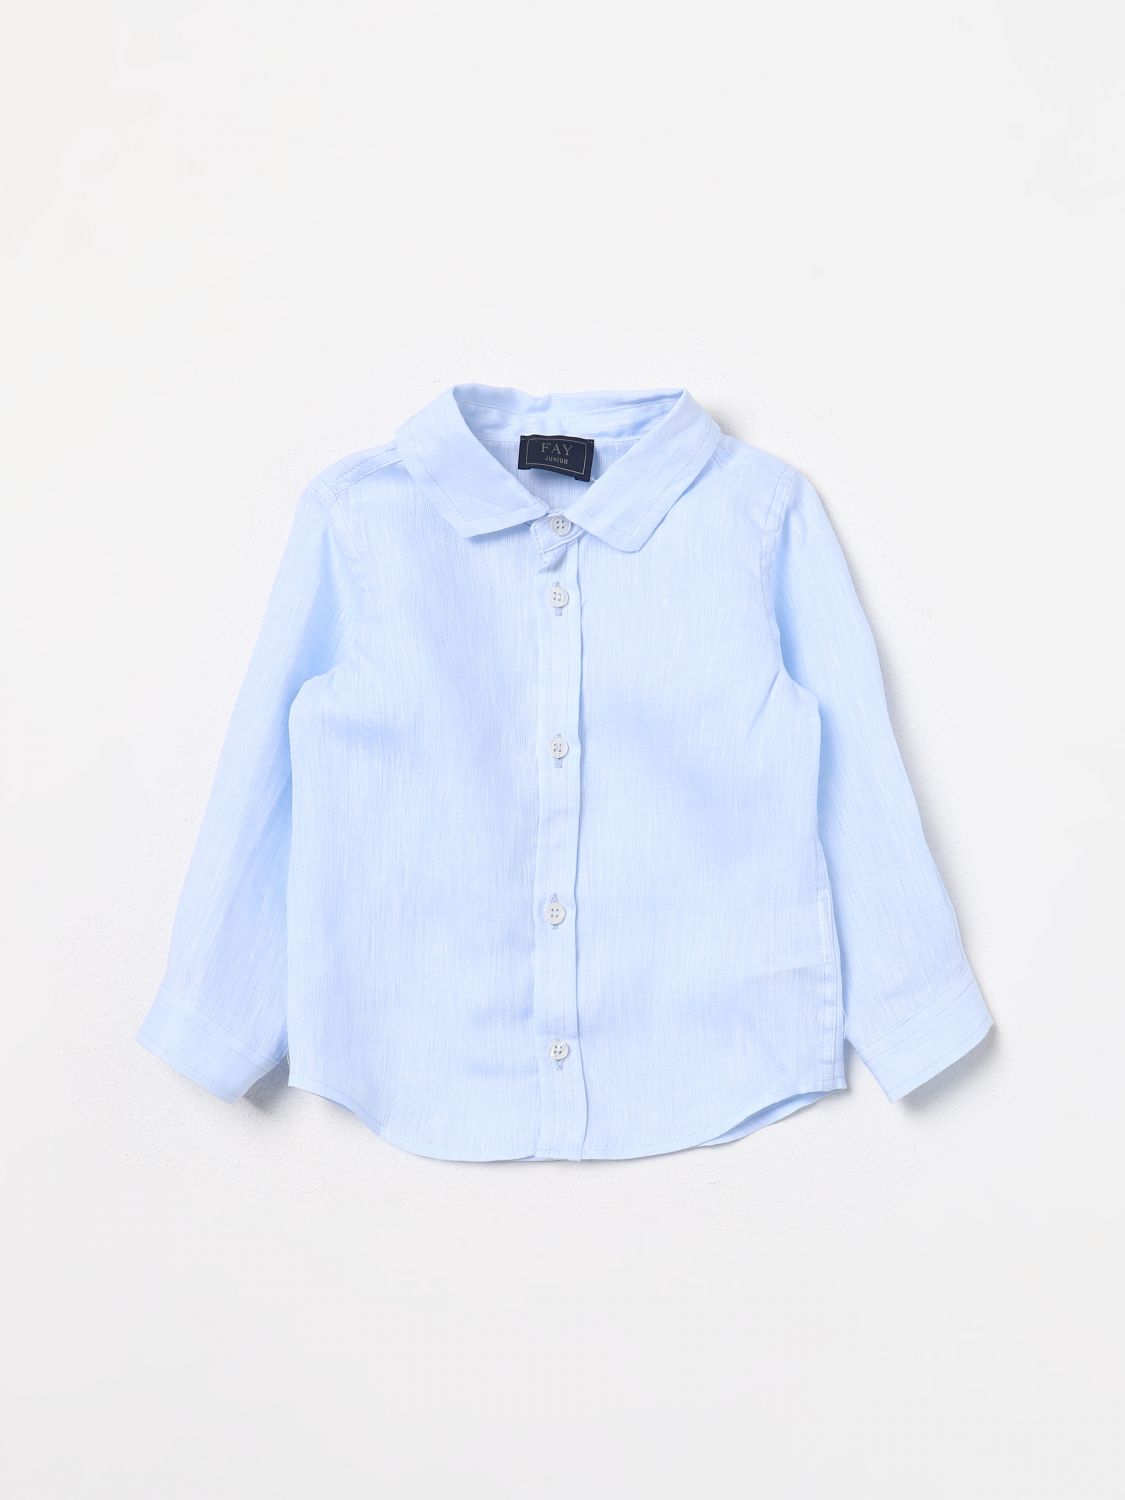 Fay Junior Babies' Shirt  Kids Color Gnawed Blue